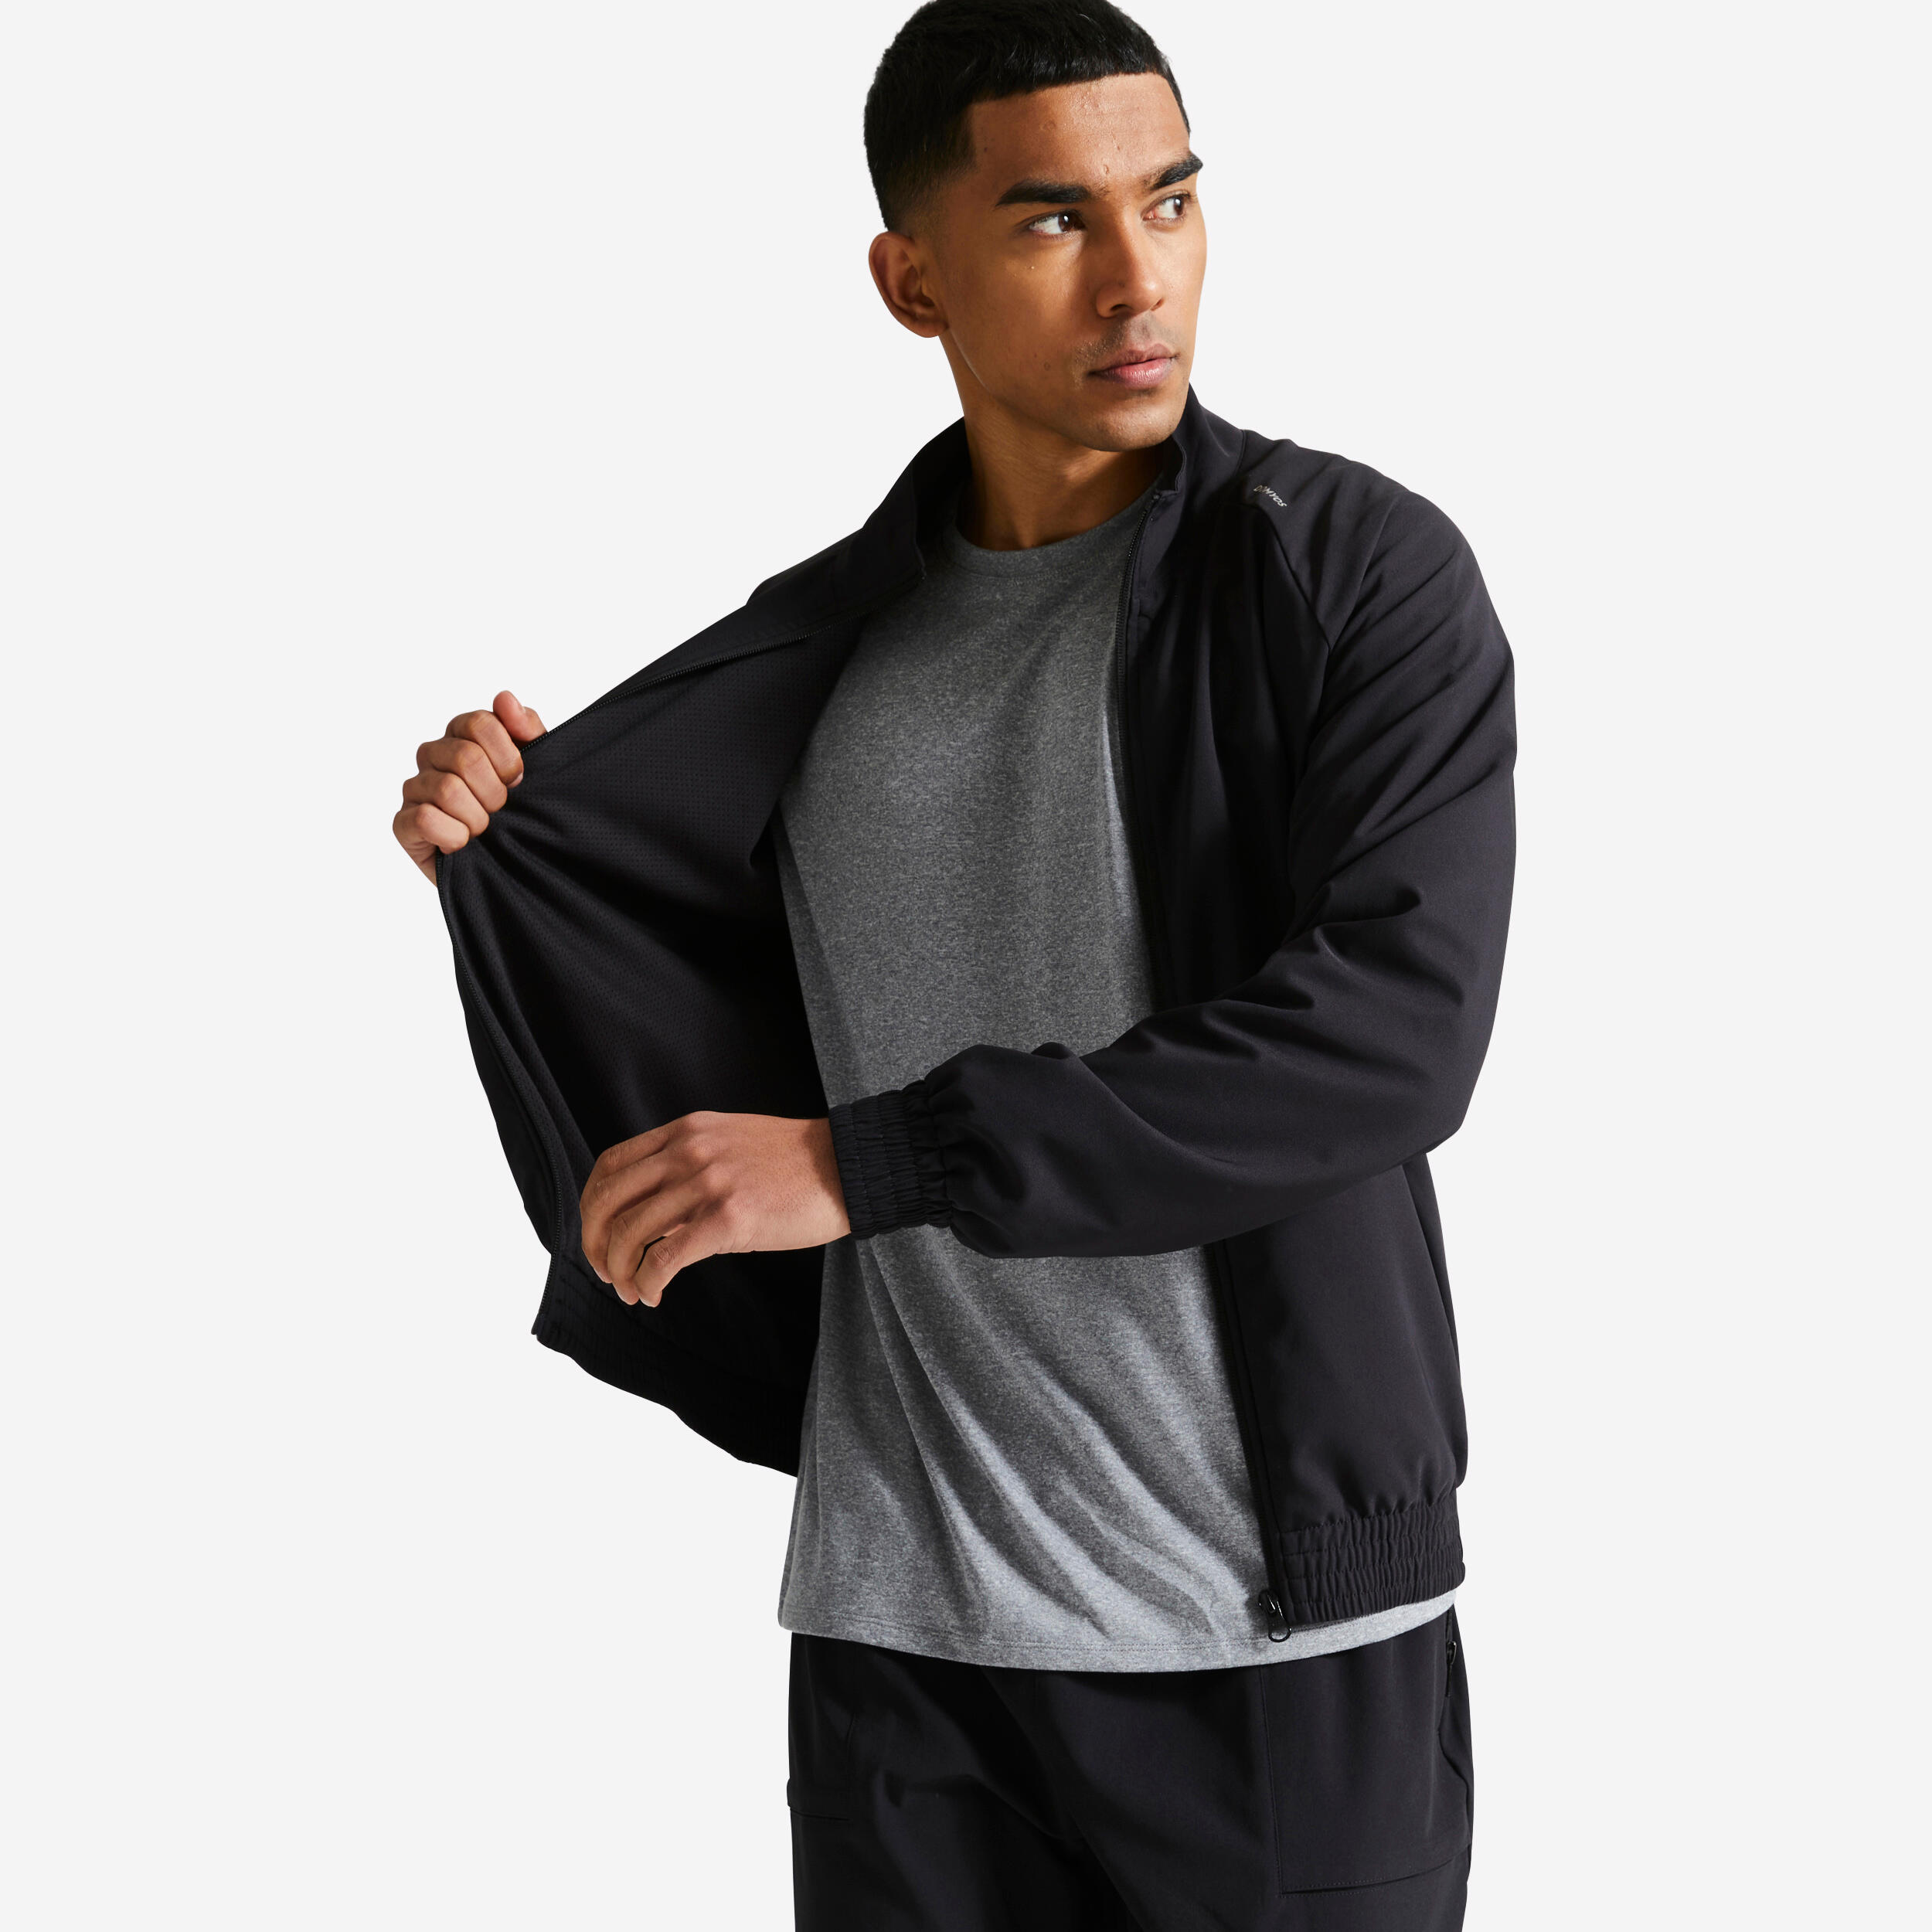 DOMYOS Men's Fitness Standard Breathable Jacket - Black